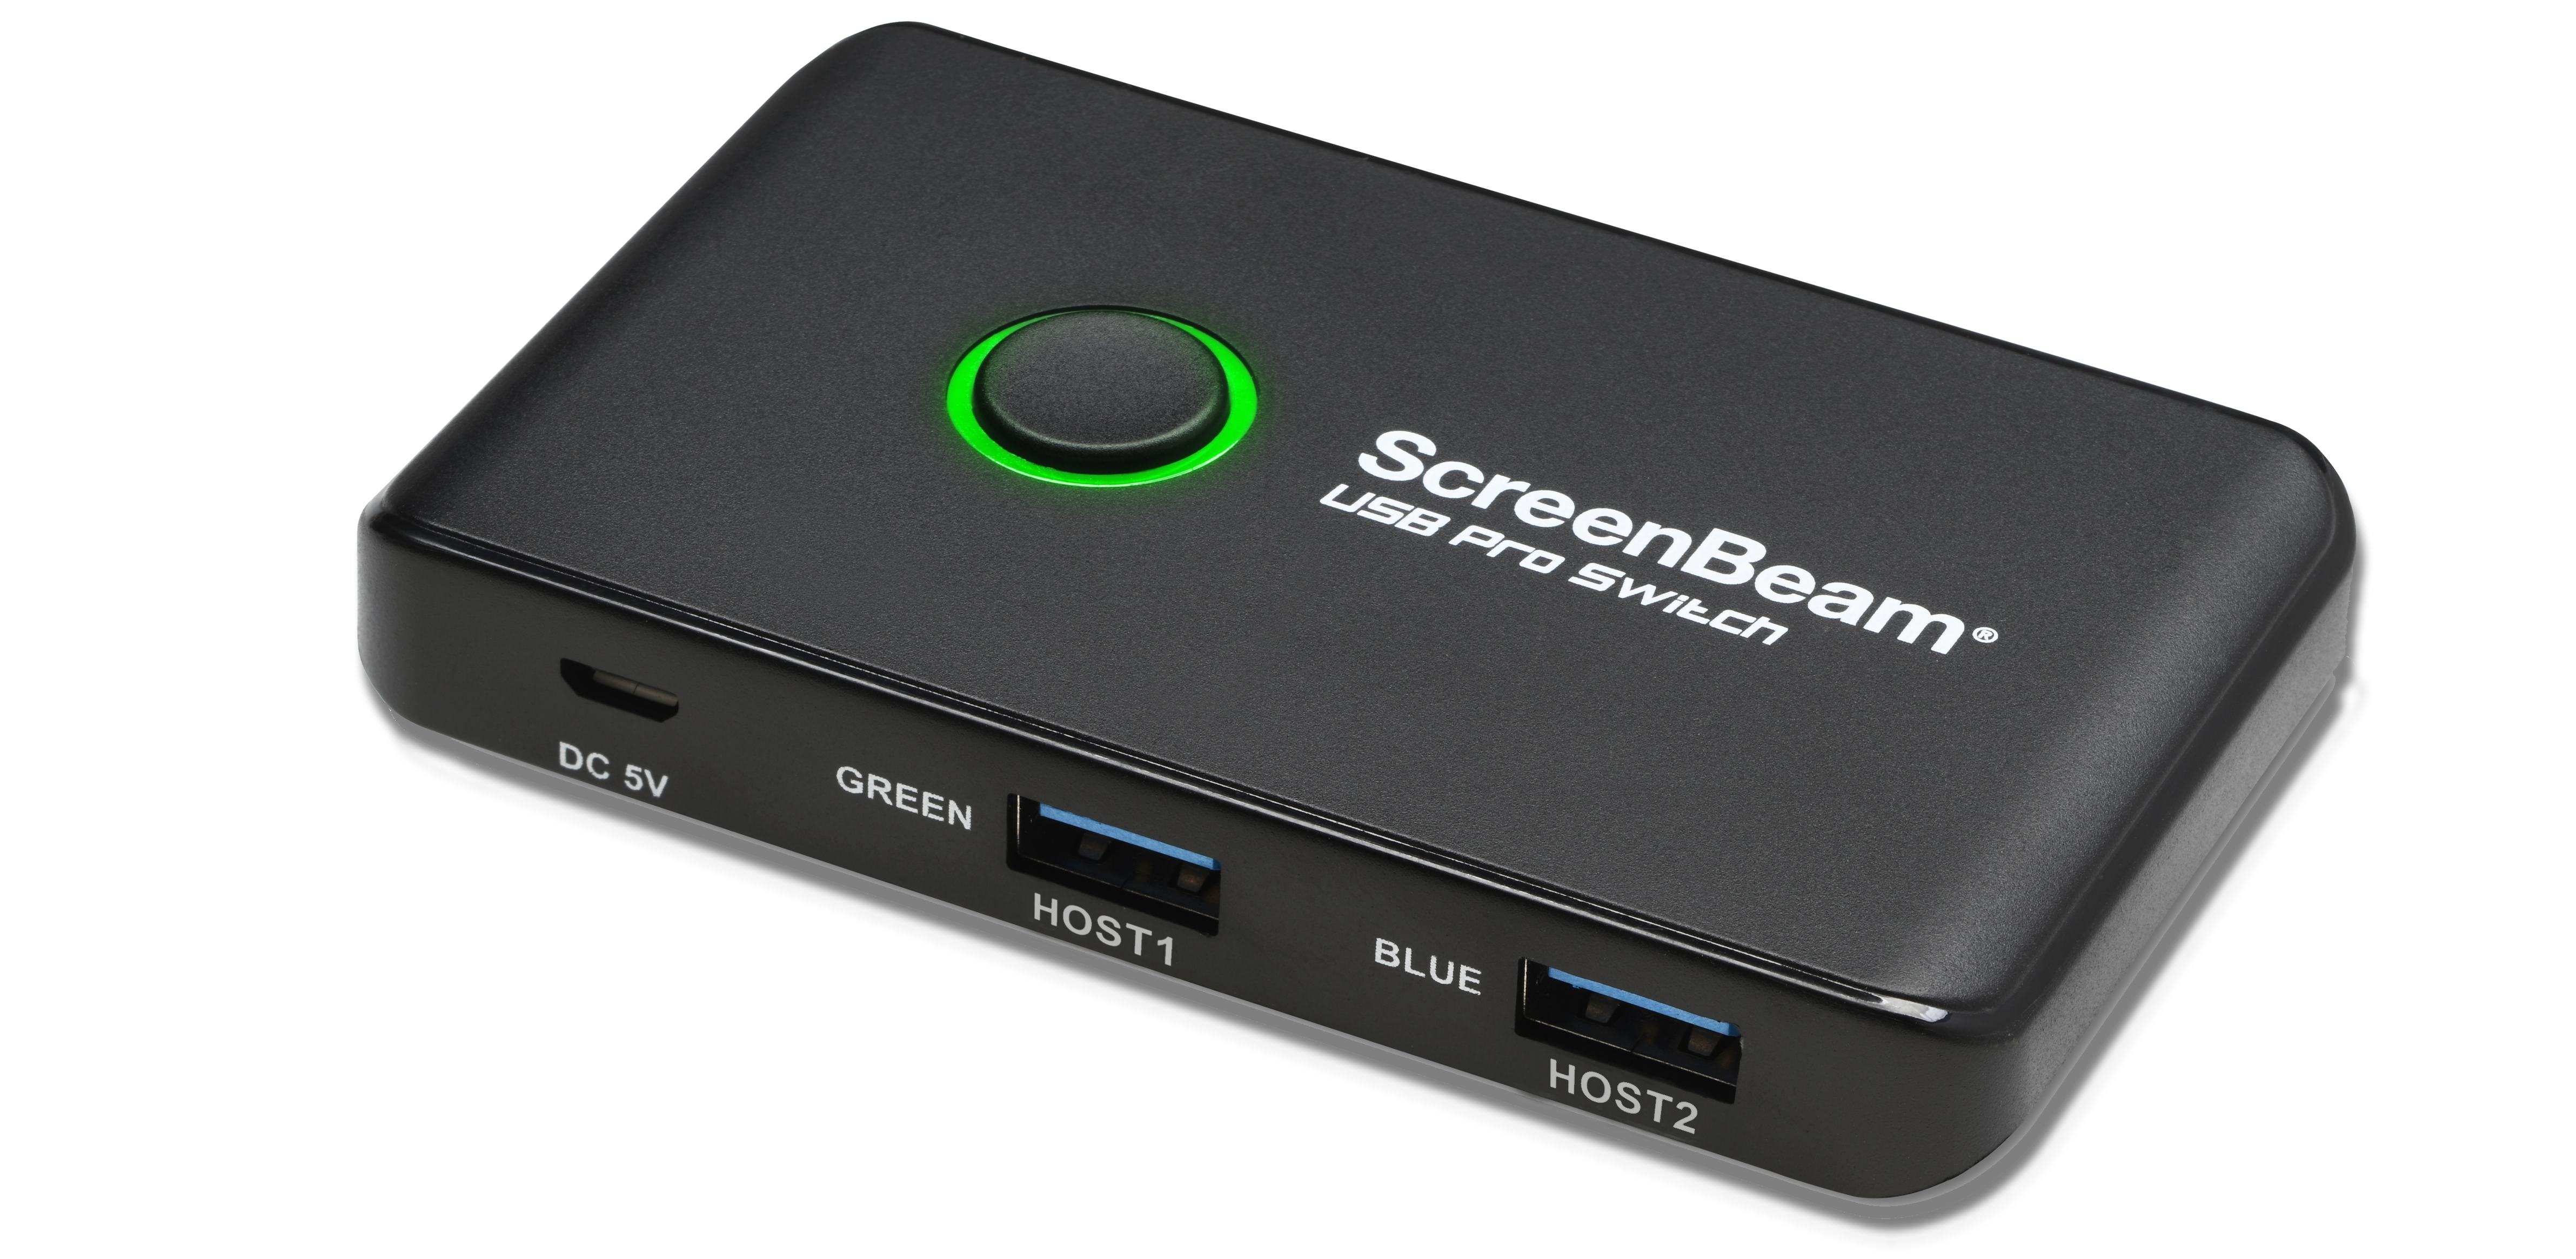 ScreenBeam USB Pro Switch intelligently enhances UC room integration